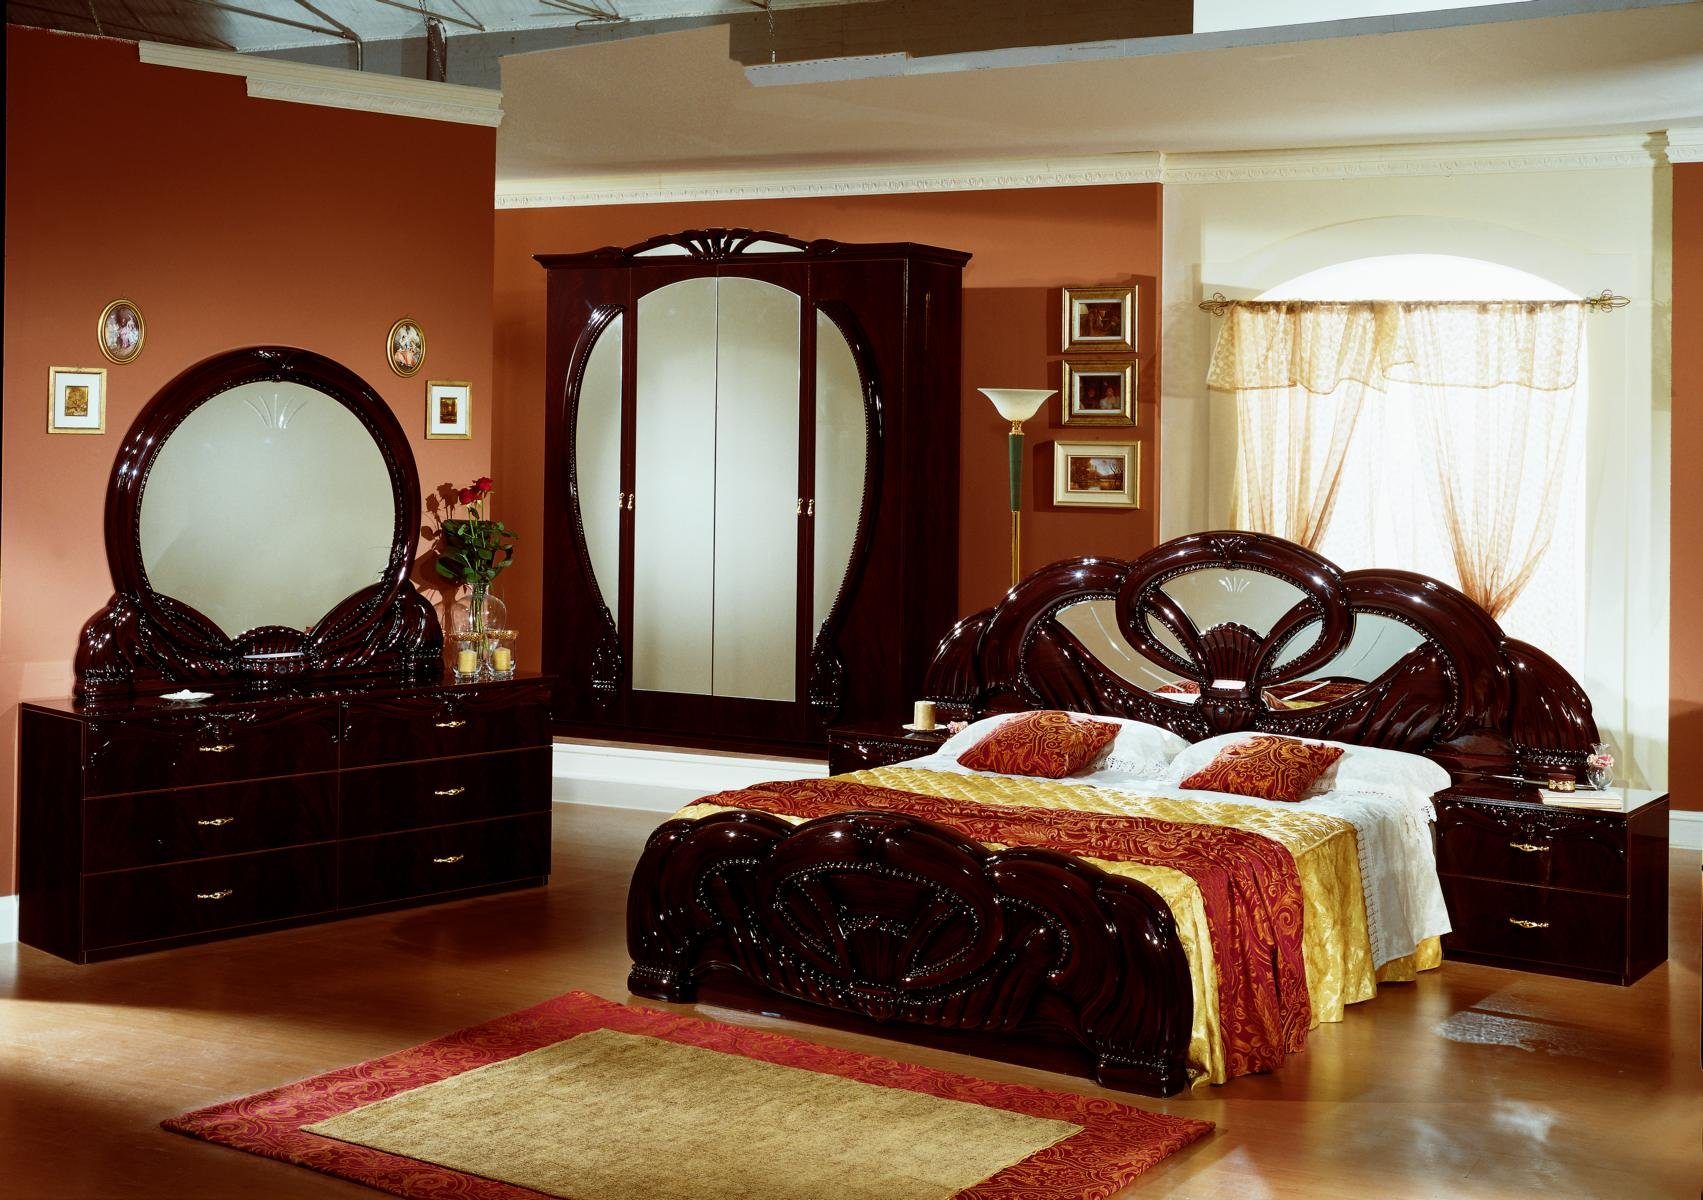 Doppel Exclusiv Betten JVmoebel Bett Möbel Bett Polster Design Italienische Betten